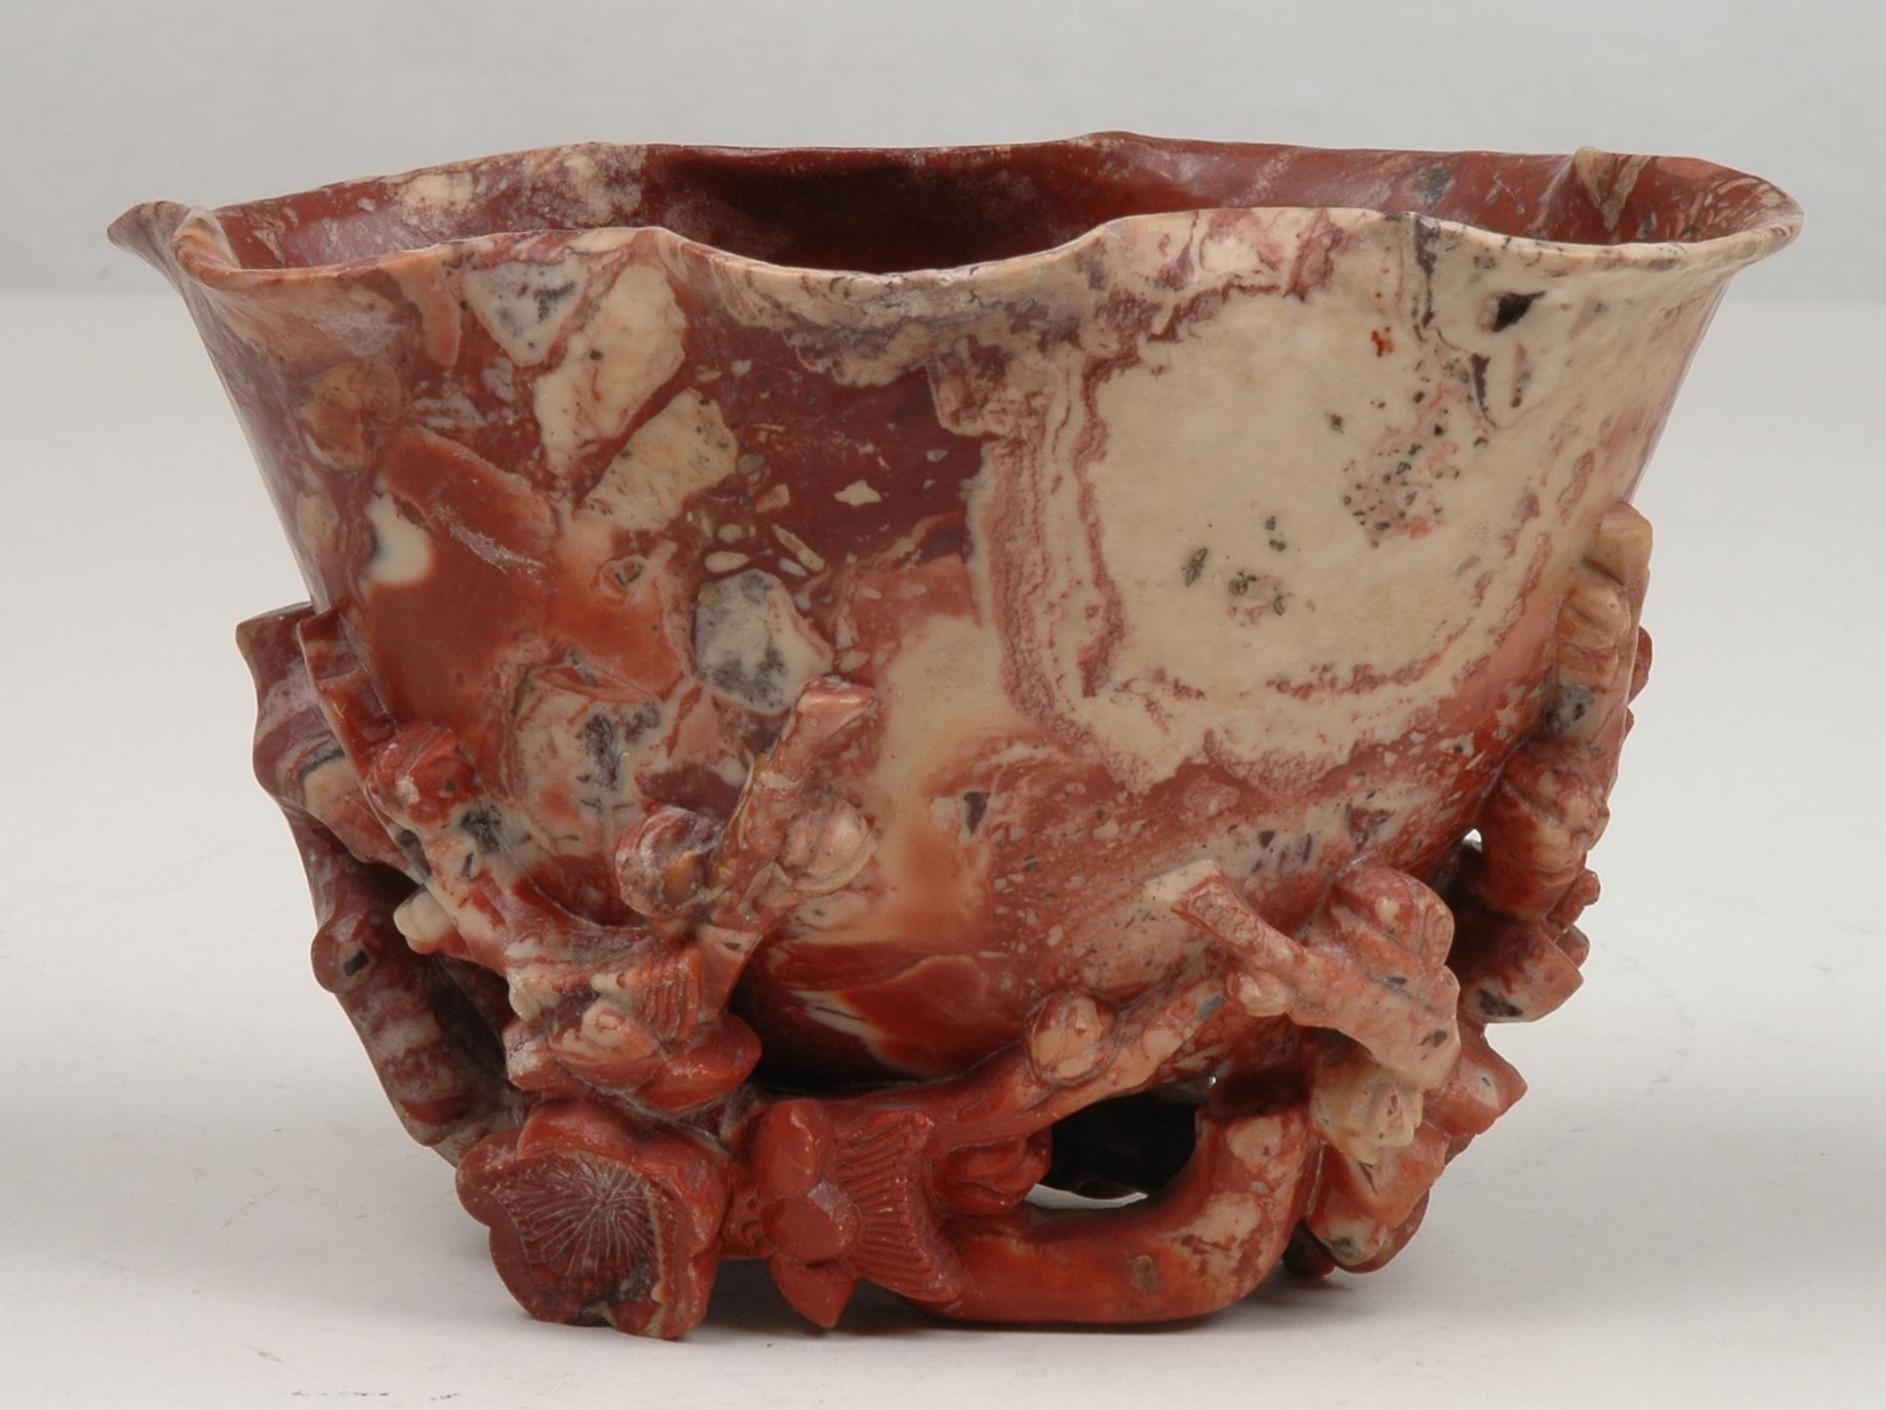 Vase aus China, 17. Jahrhundert (Landesmuseum Württemberg, Stuttgart CC BY-SA)